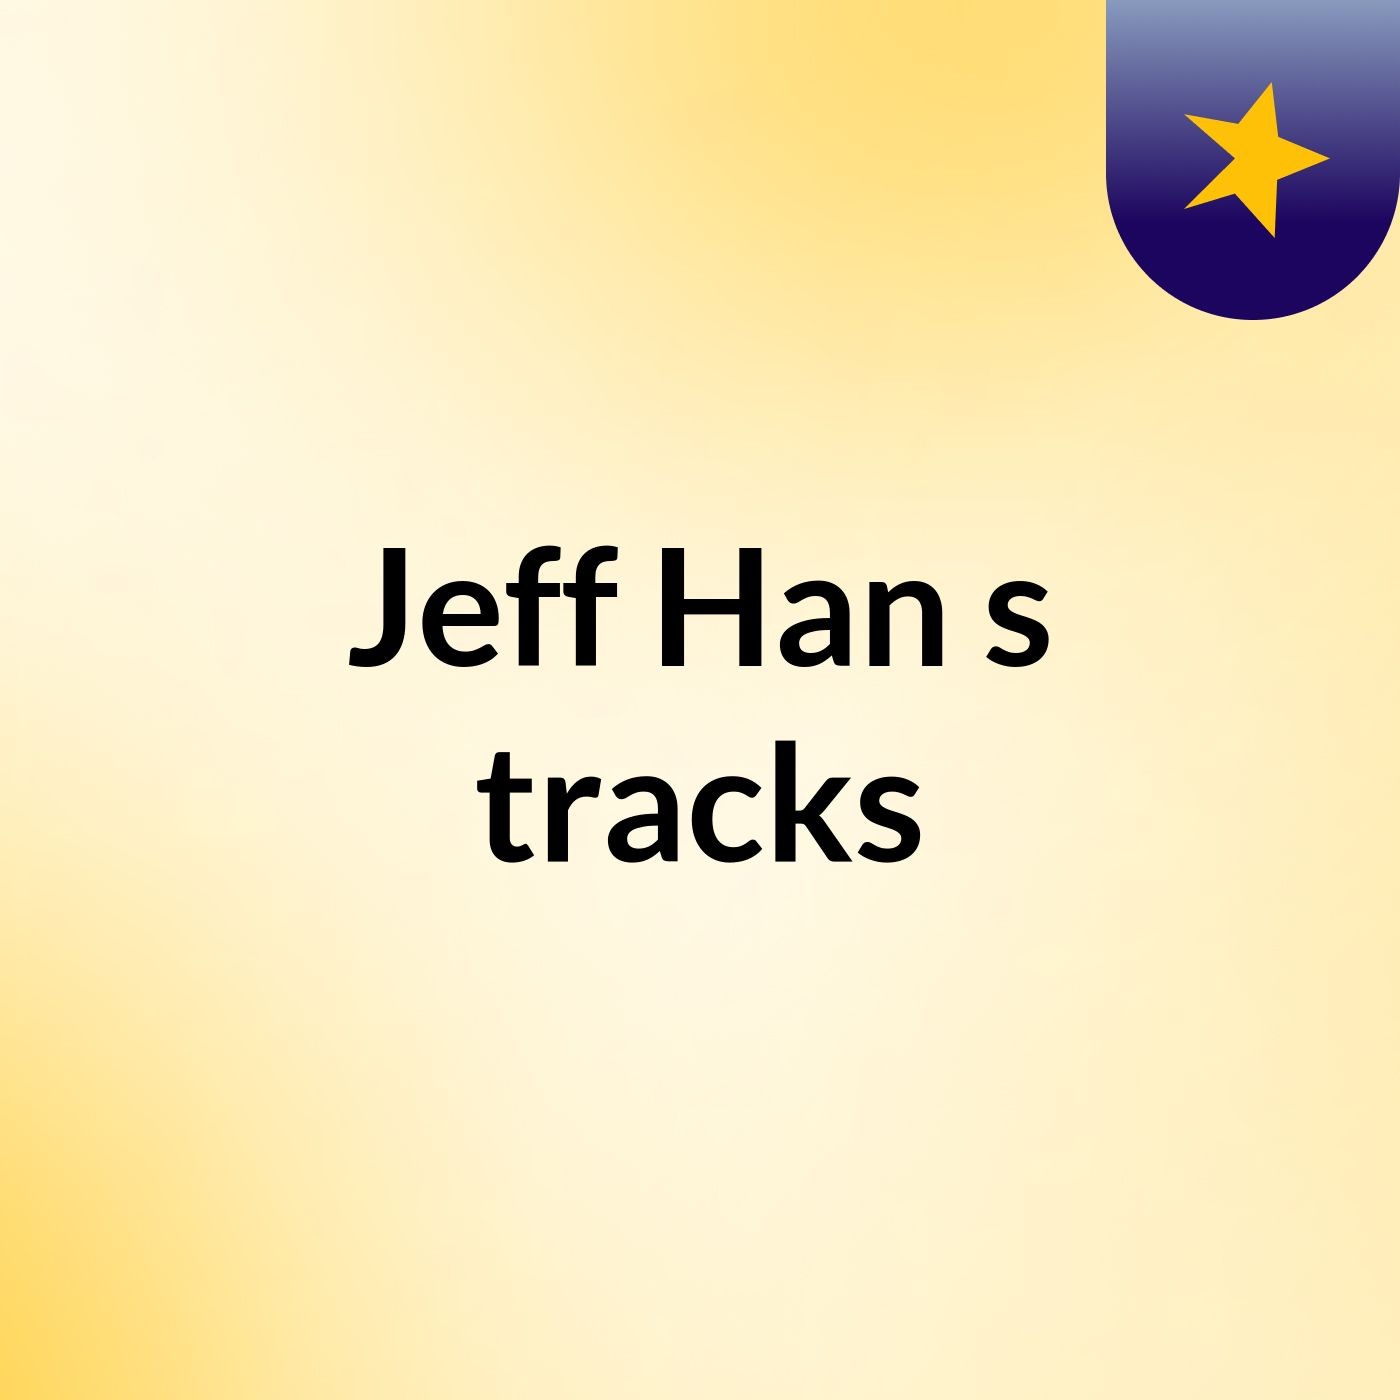 Jeff Han's tracks